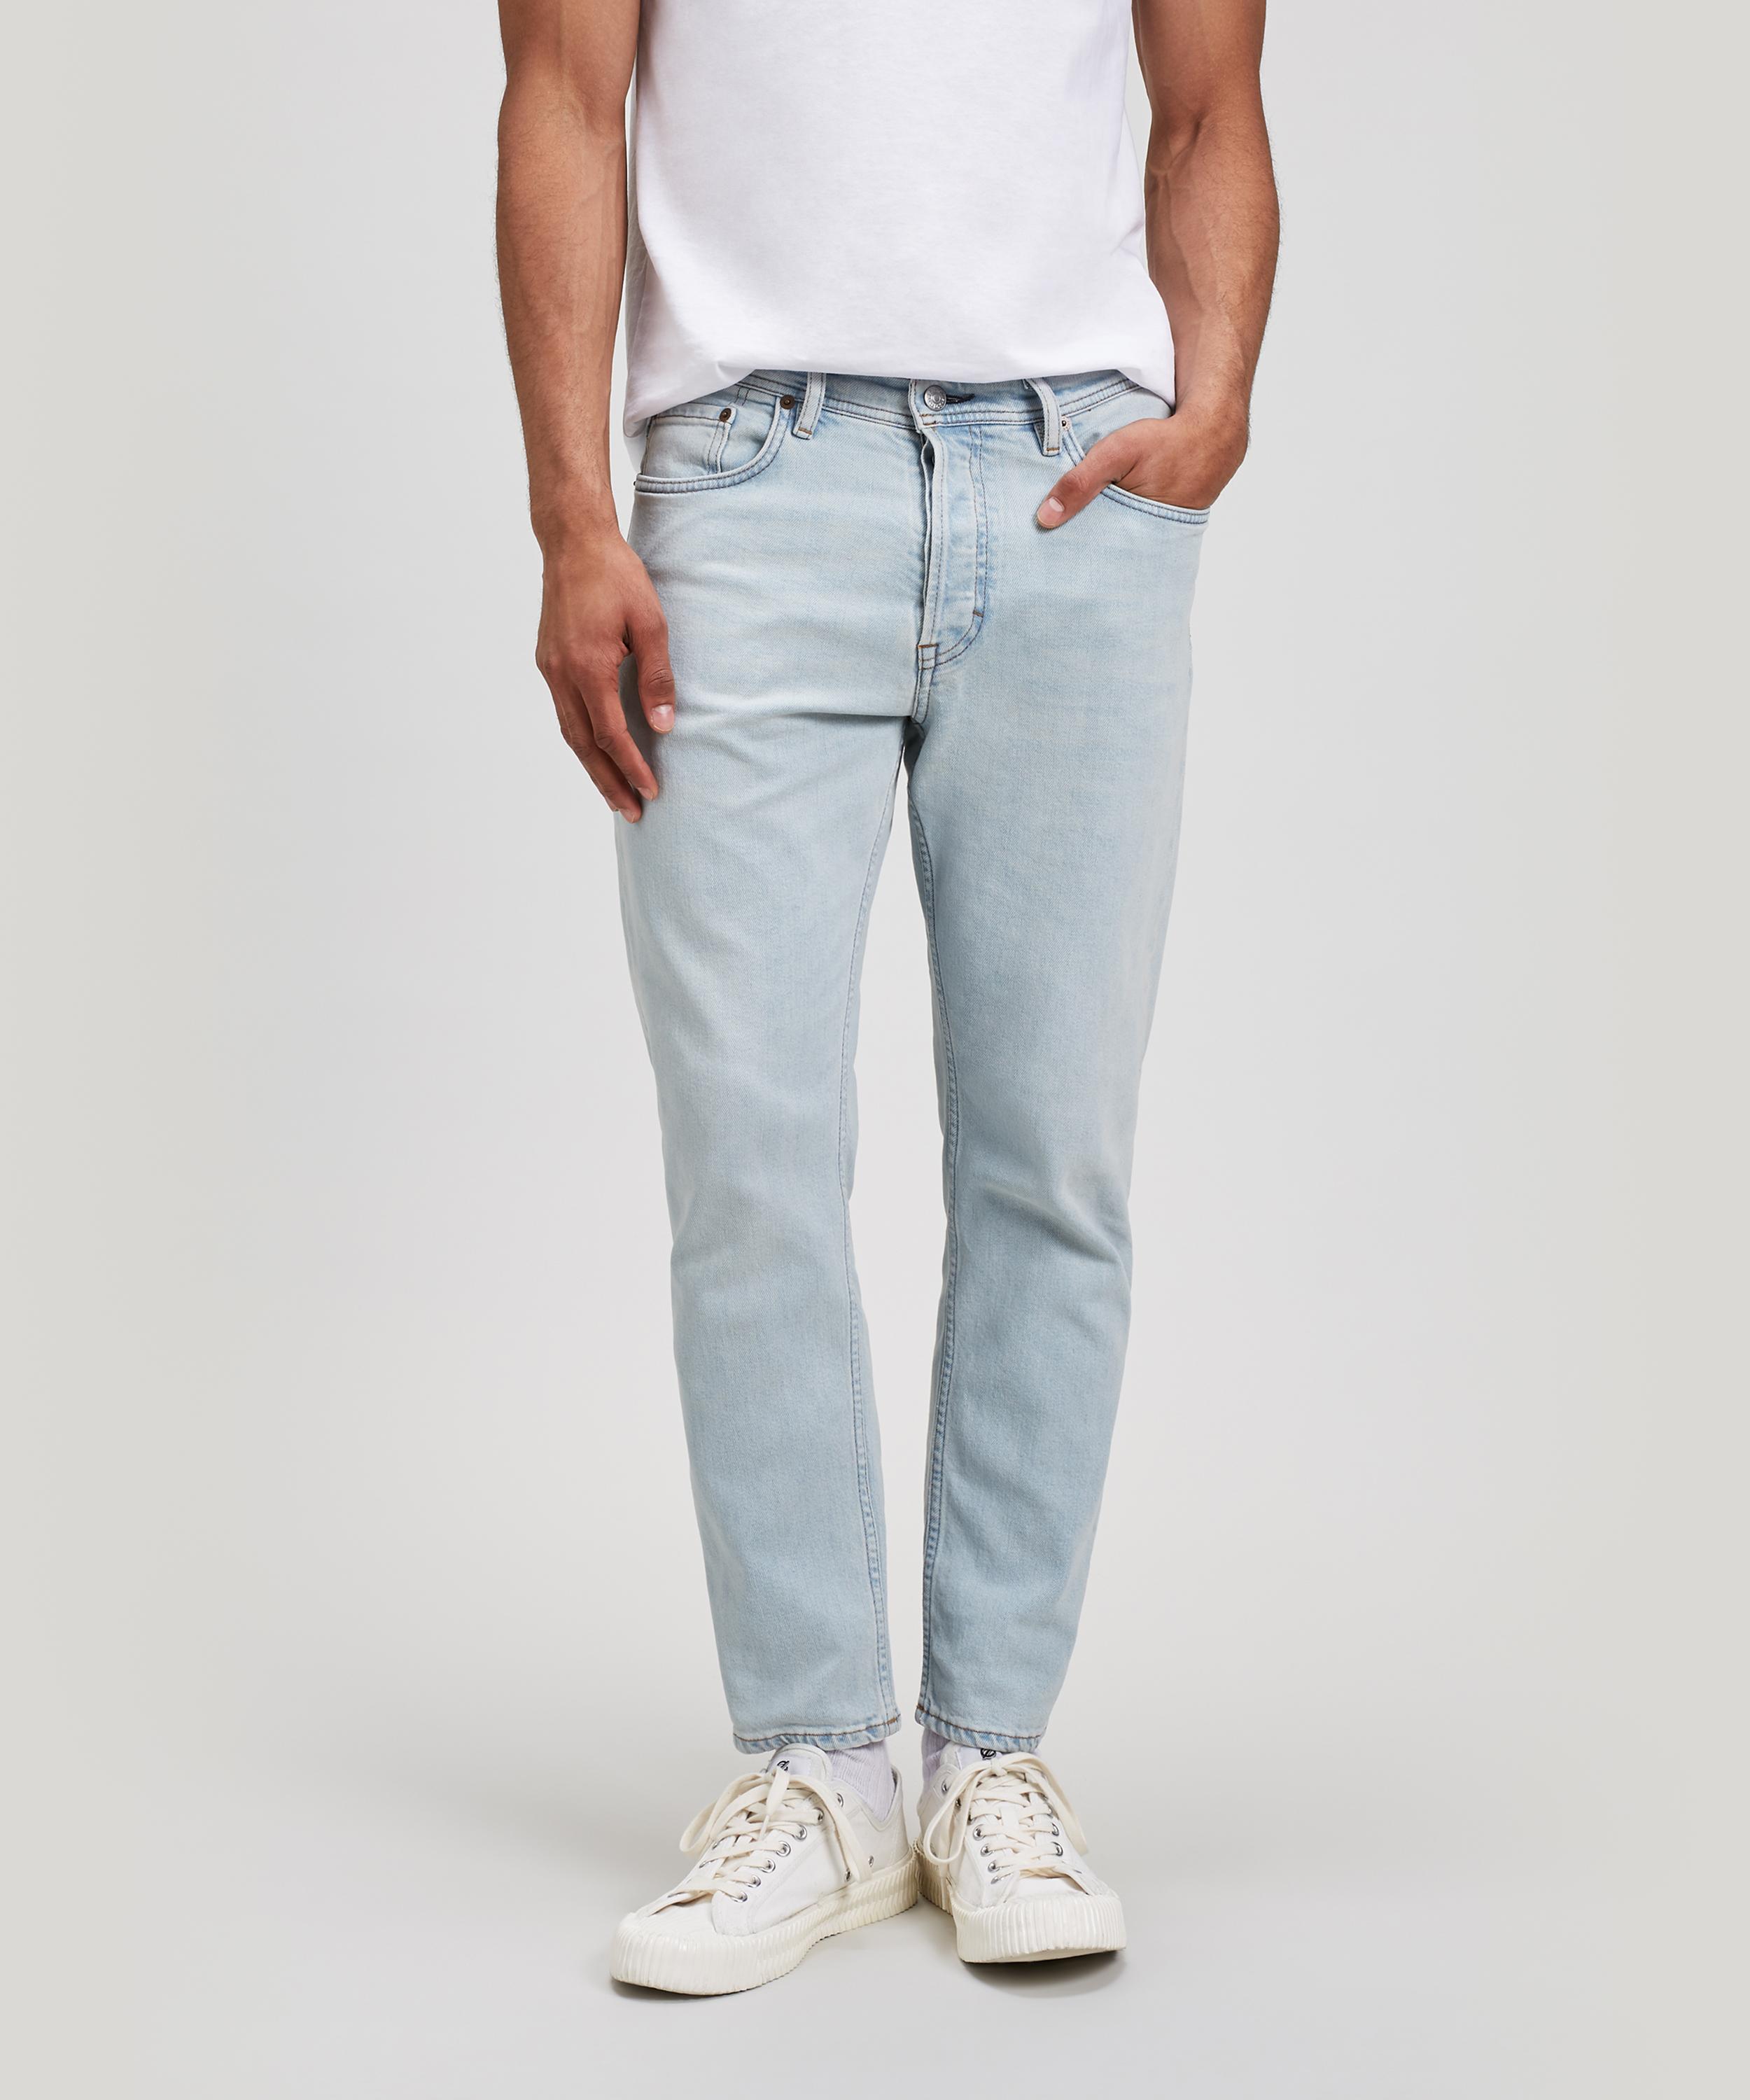 Acne Studios Denim River Straight Fit Jeans in Light Blue (Blue) for Men -  Lyst